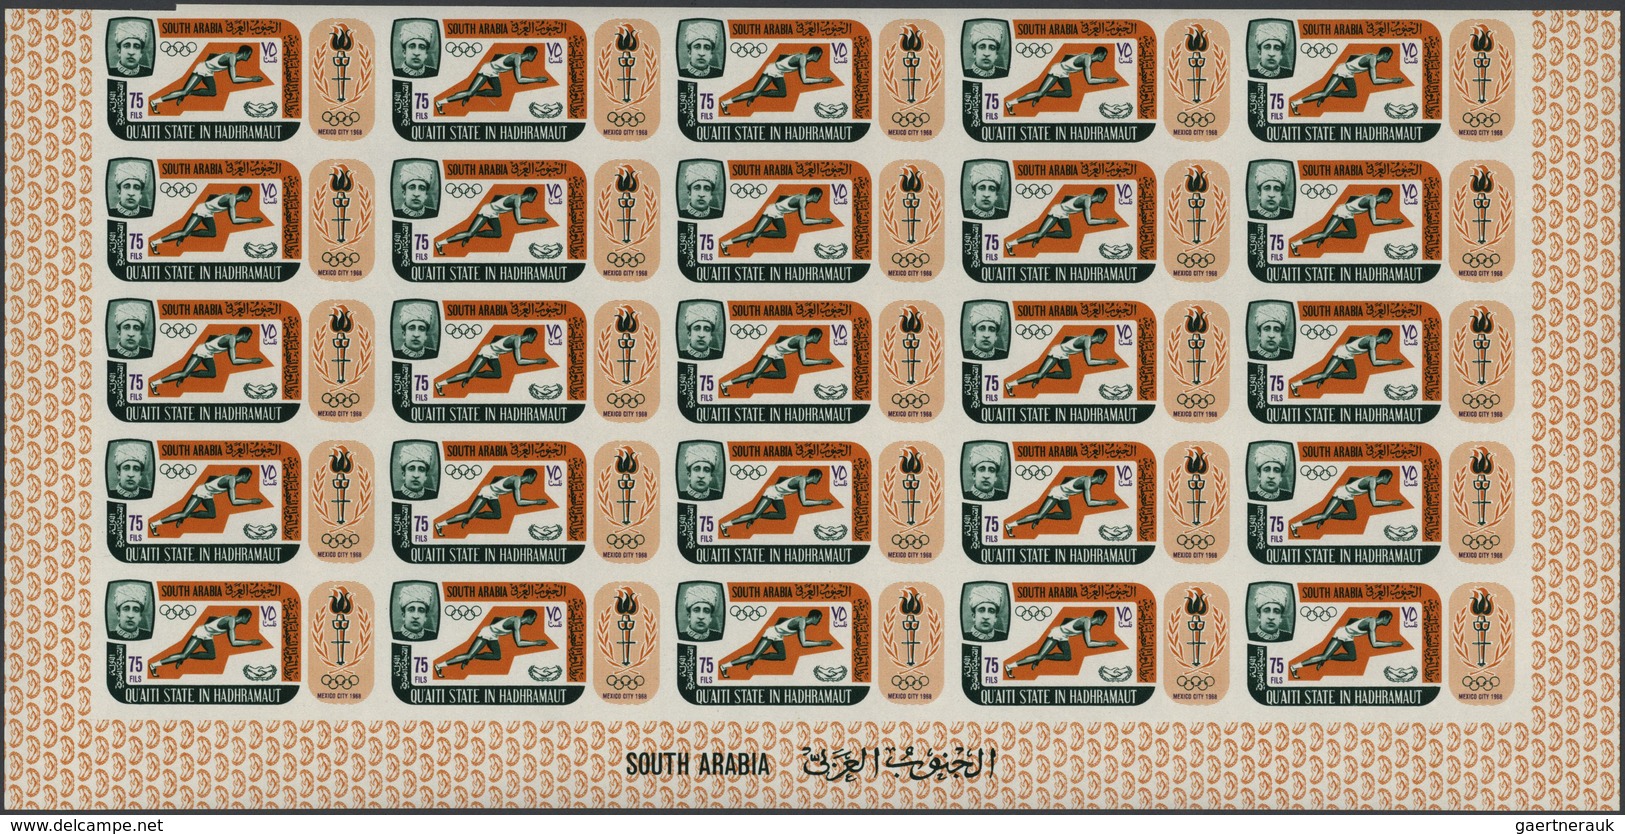 22020 Aden - Kathiri State of Seiyun: 1967/1968, Seiyun/Hadhramaut/Mahra, u/m assortment of complete sheet